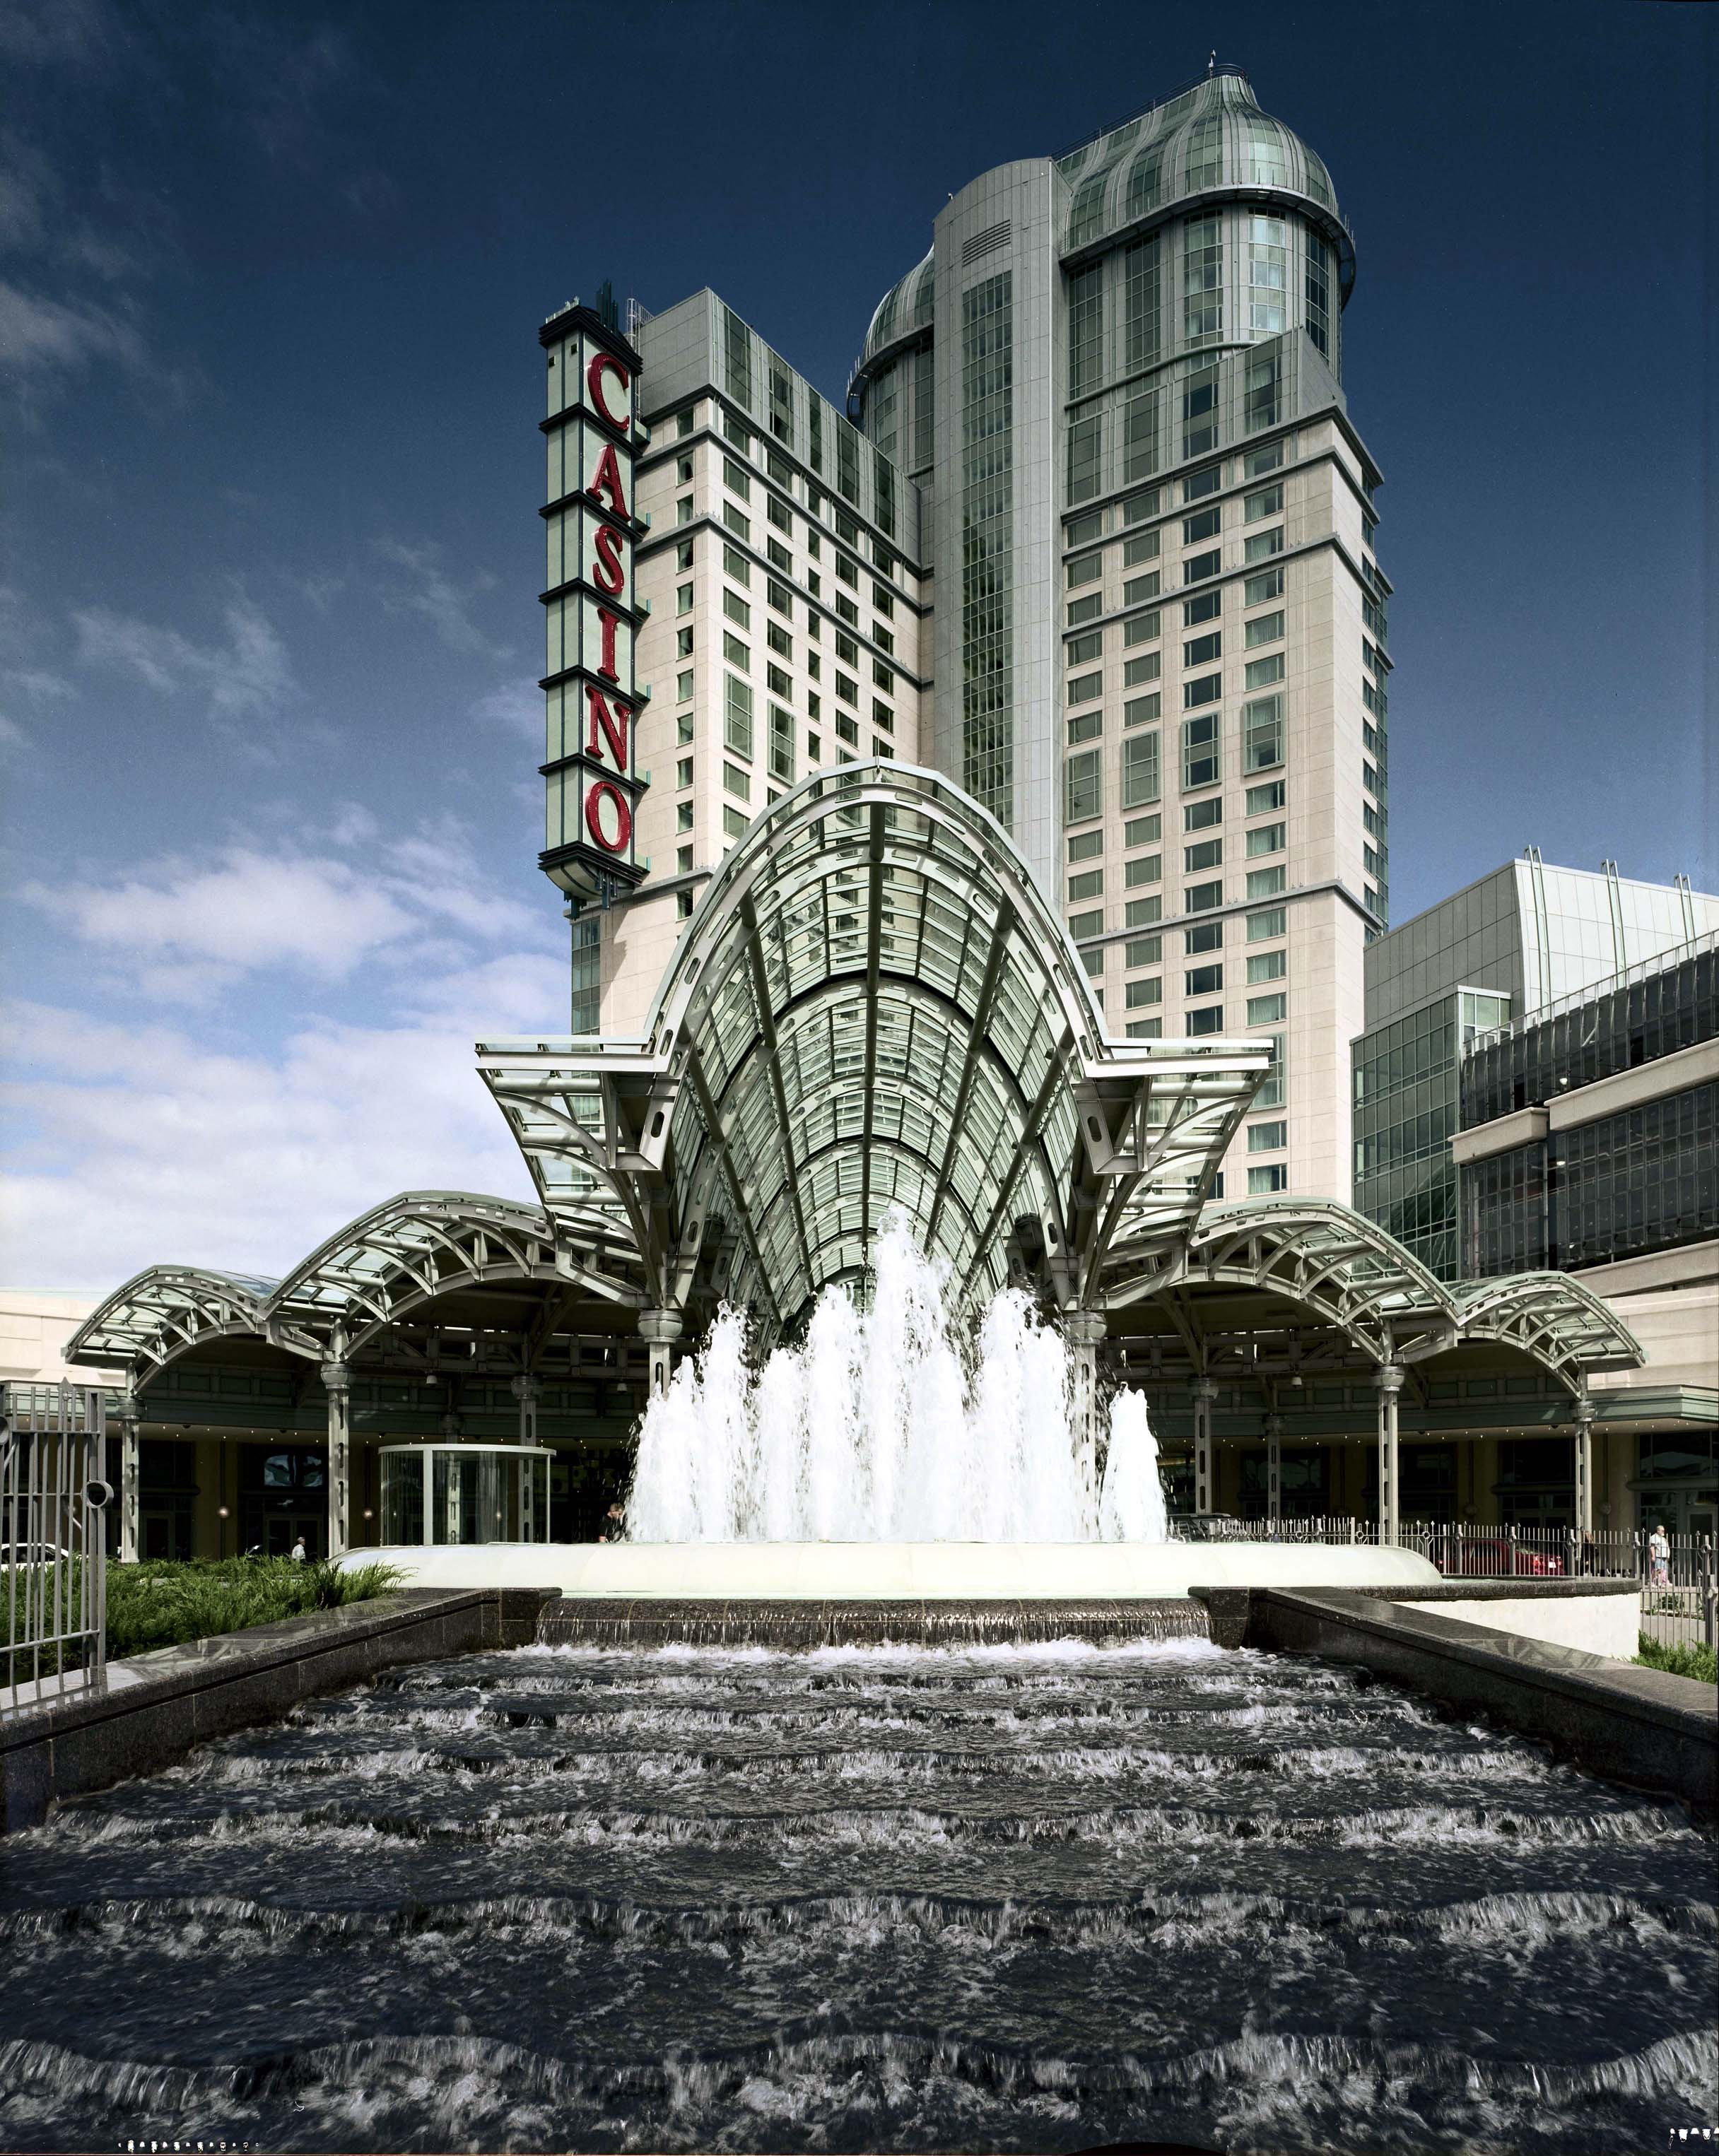 Niagara Fallsview Casino Resort